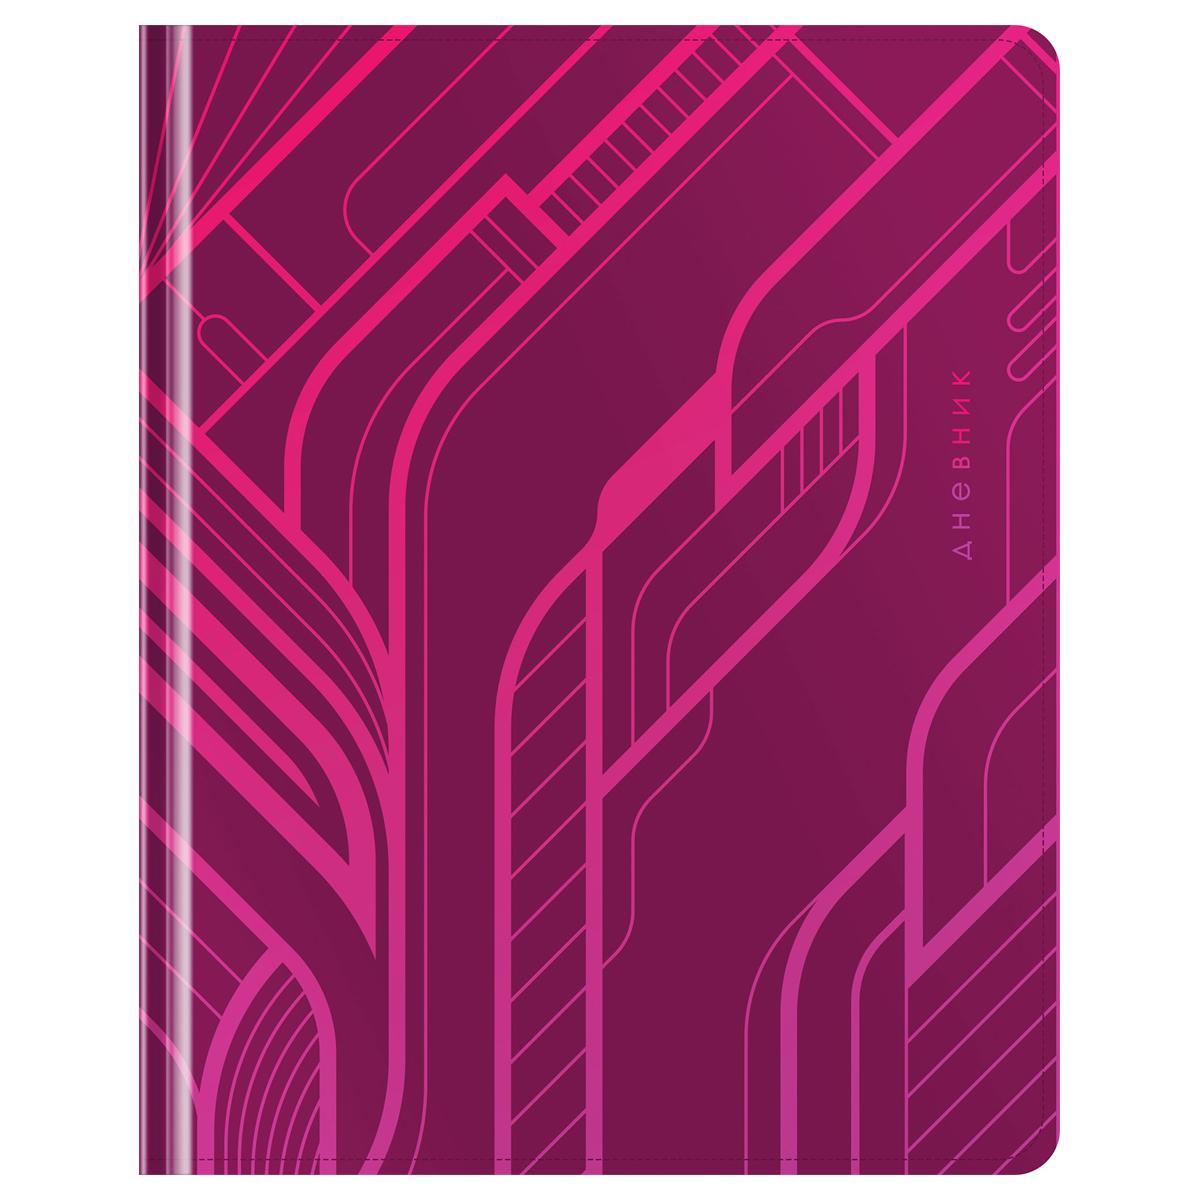 Дневник 1-11 кл. 48л. (твердый) Greenwich LineGeometry. Pink, иск. кожа, тисн. фольгой, тон. блок, ляссе